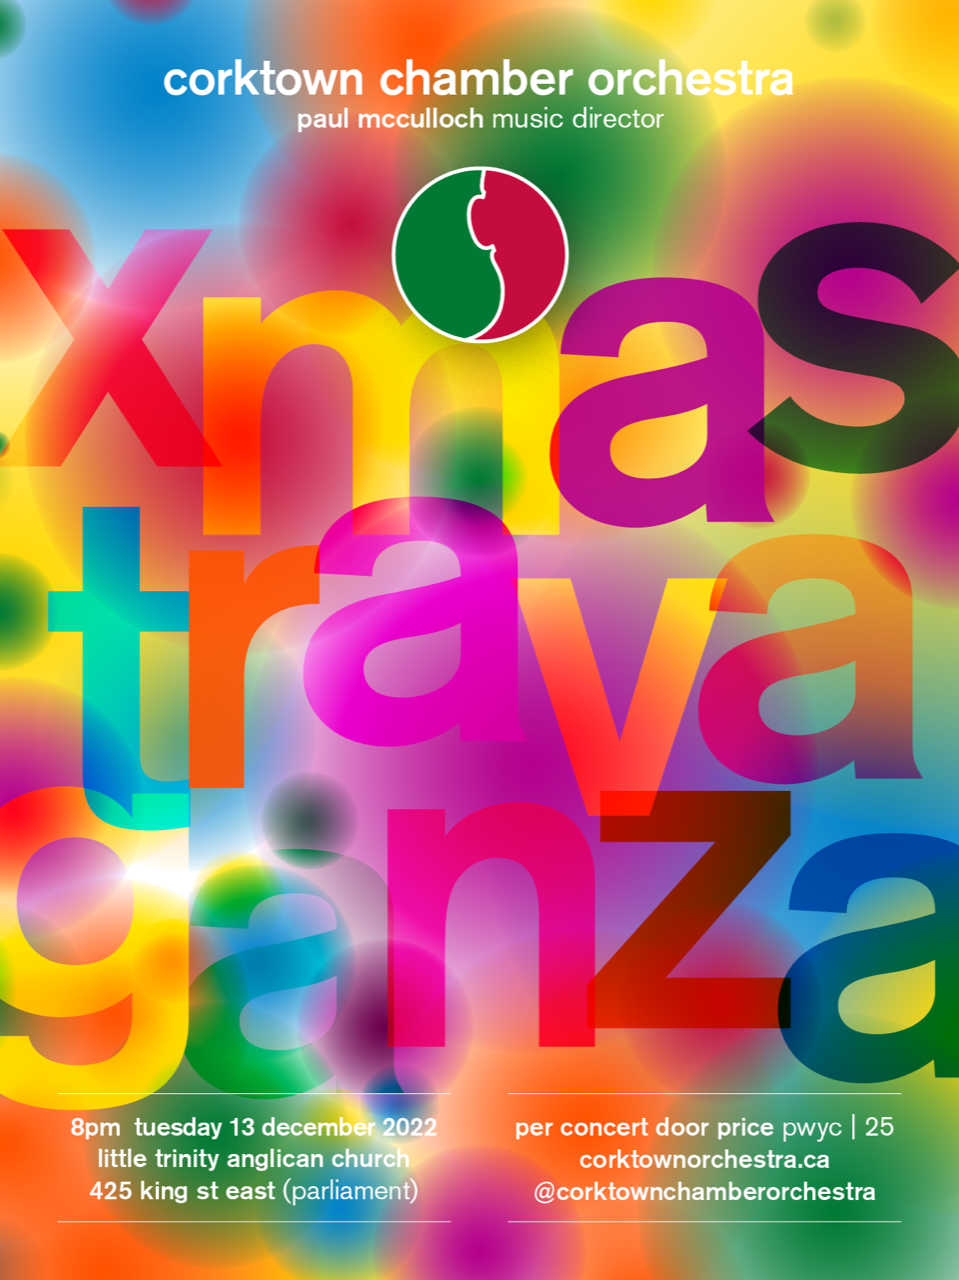 Concert poster for XMASTRAVAGANZA